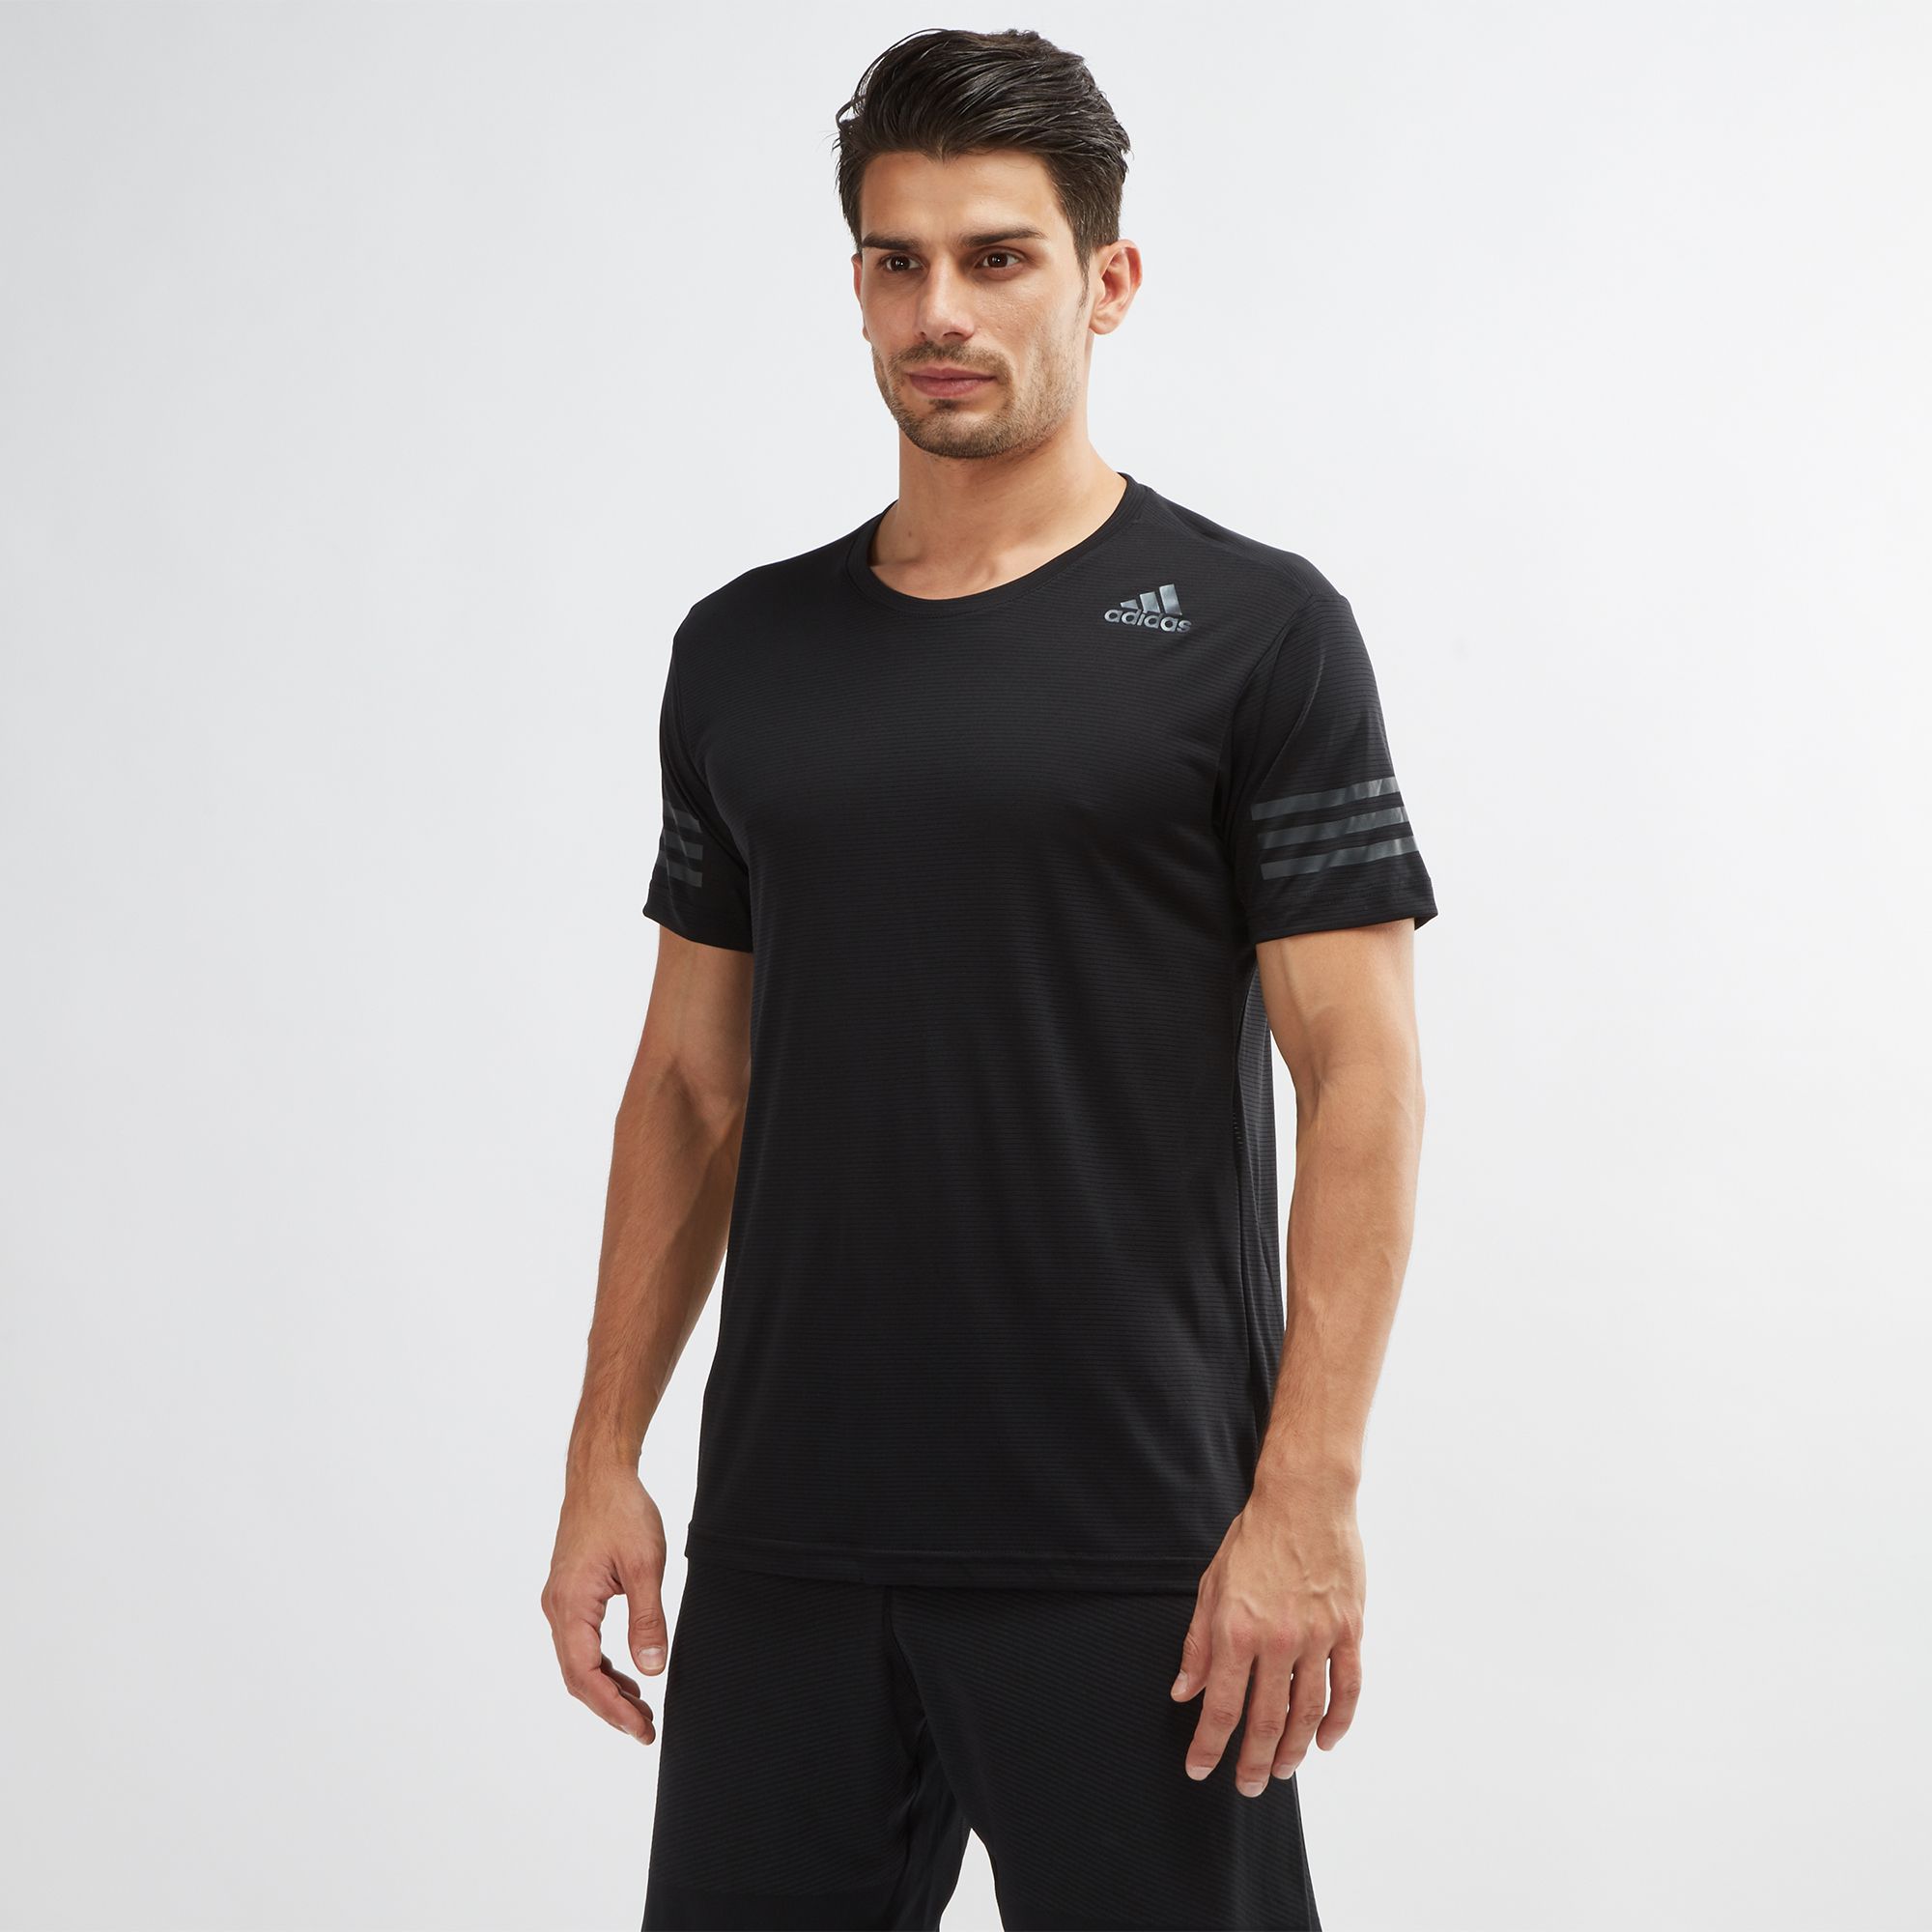 Adidas Freelift Climacool T-Shirt | T-Shirts | Tops | Clothing | Men'S ...